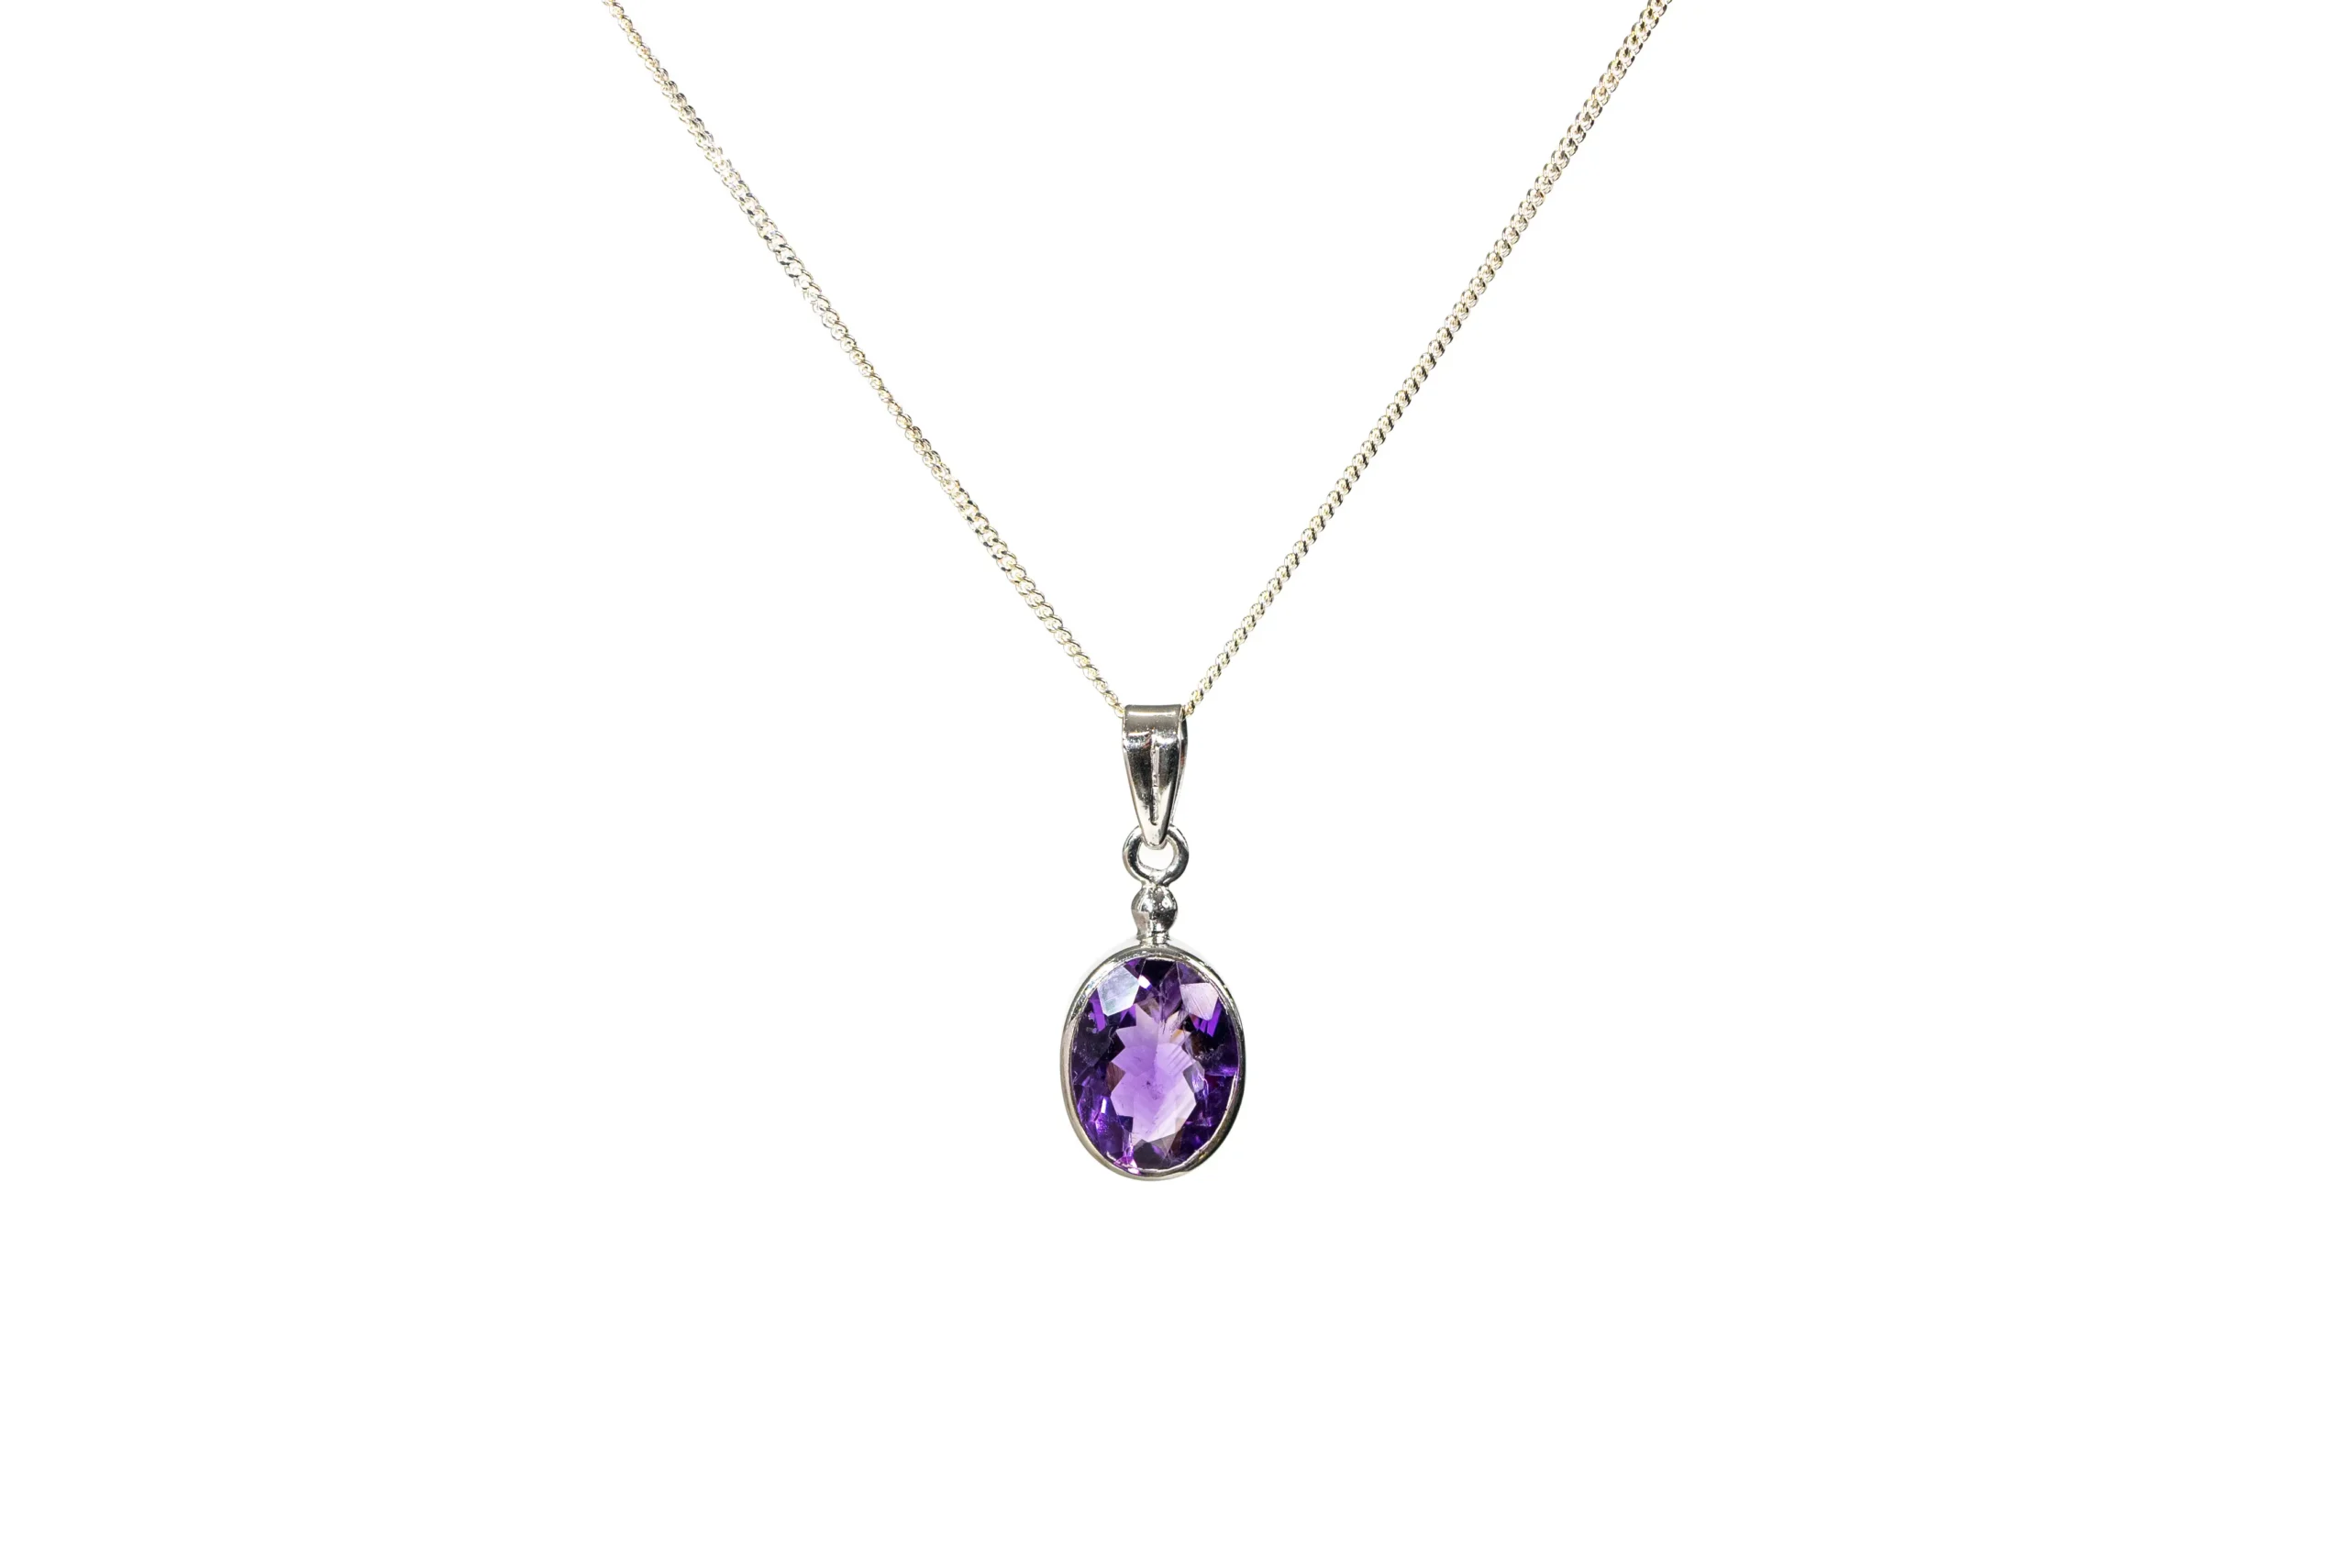 Medium size oval purple stone